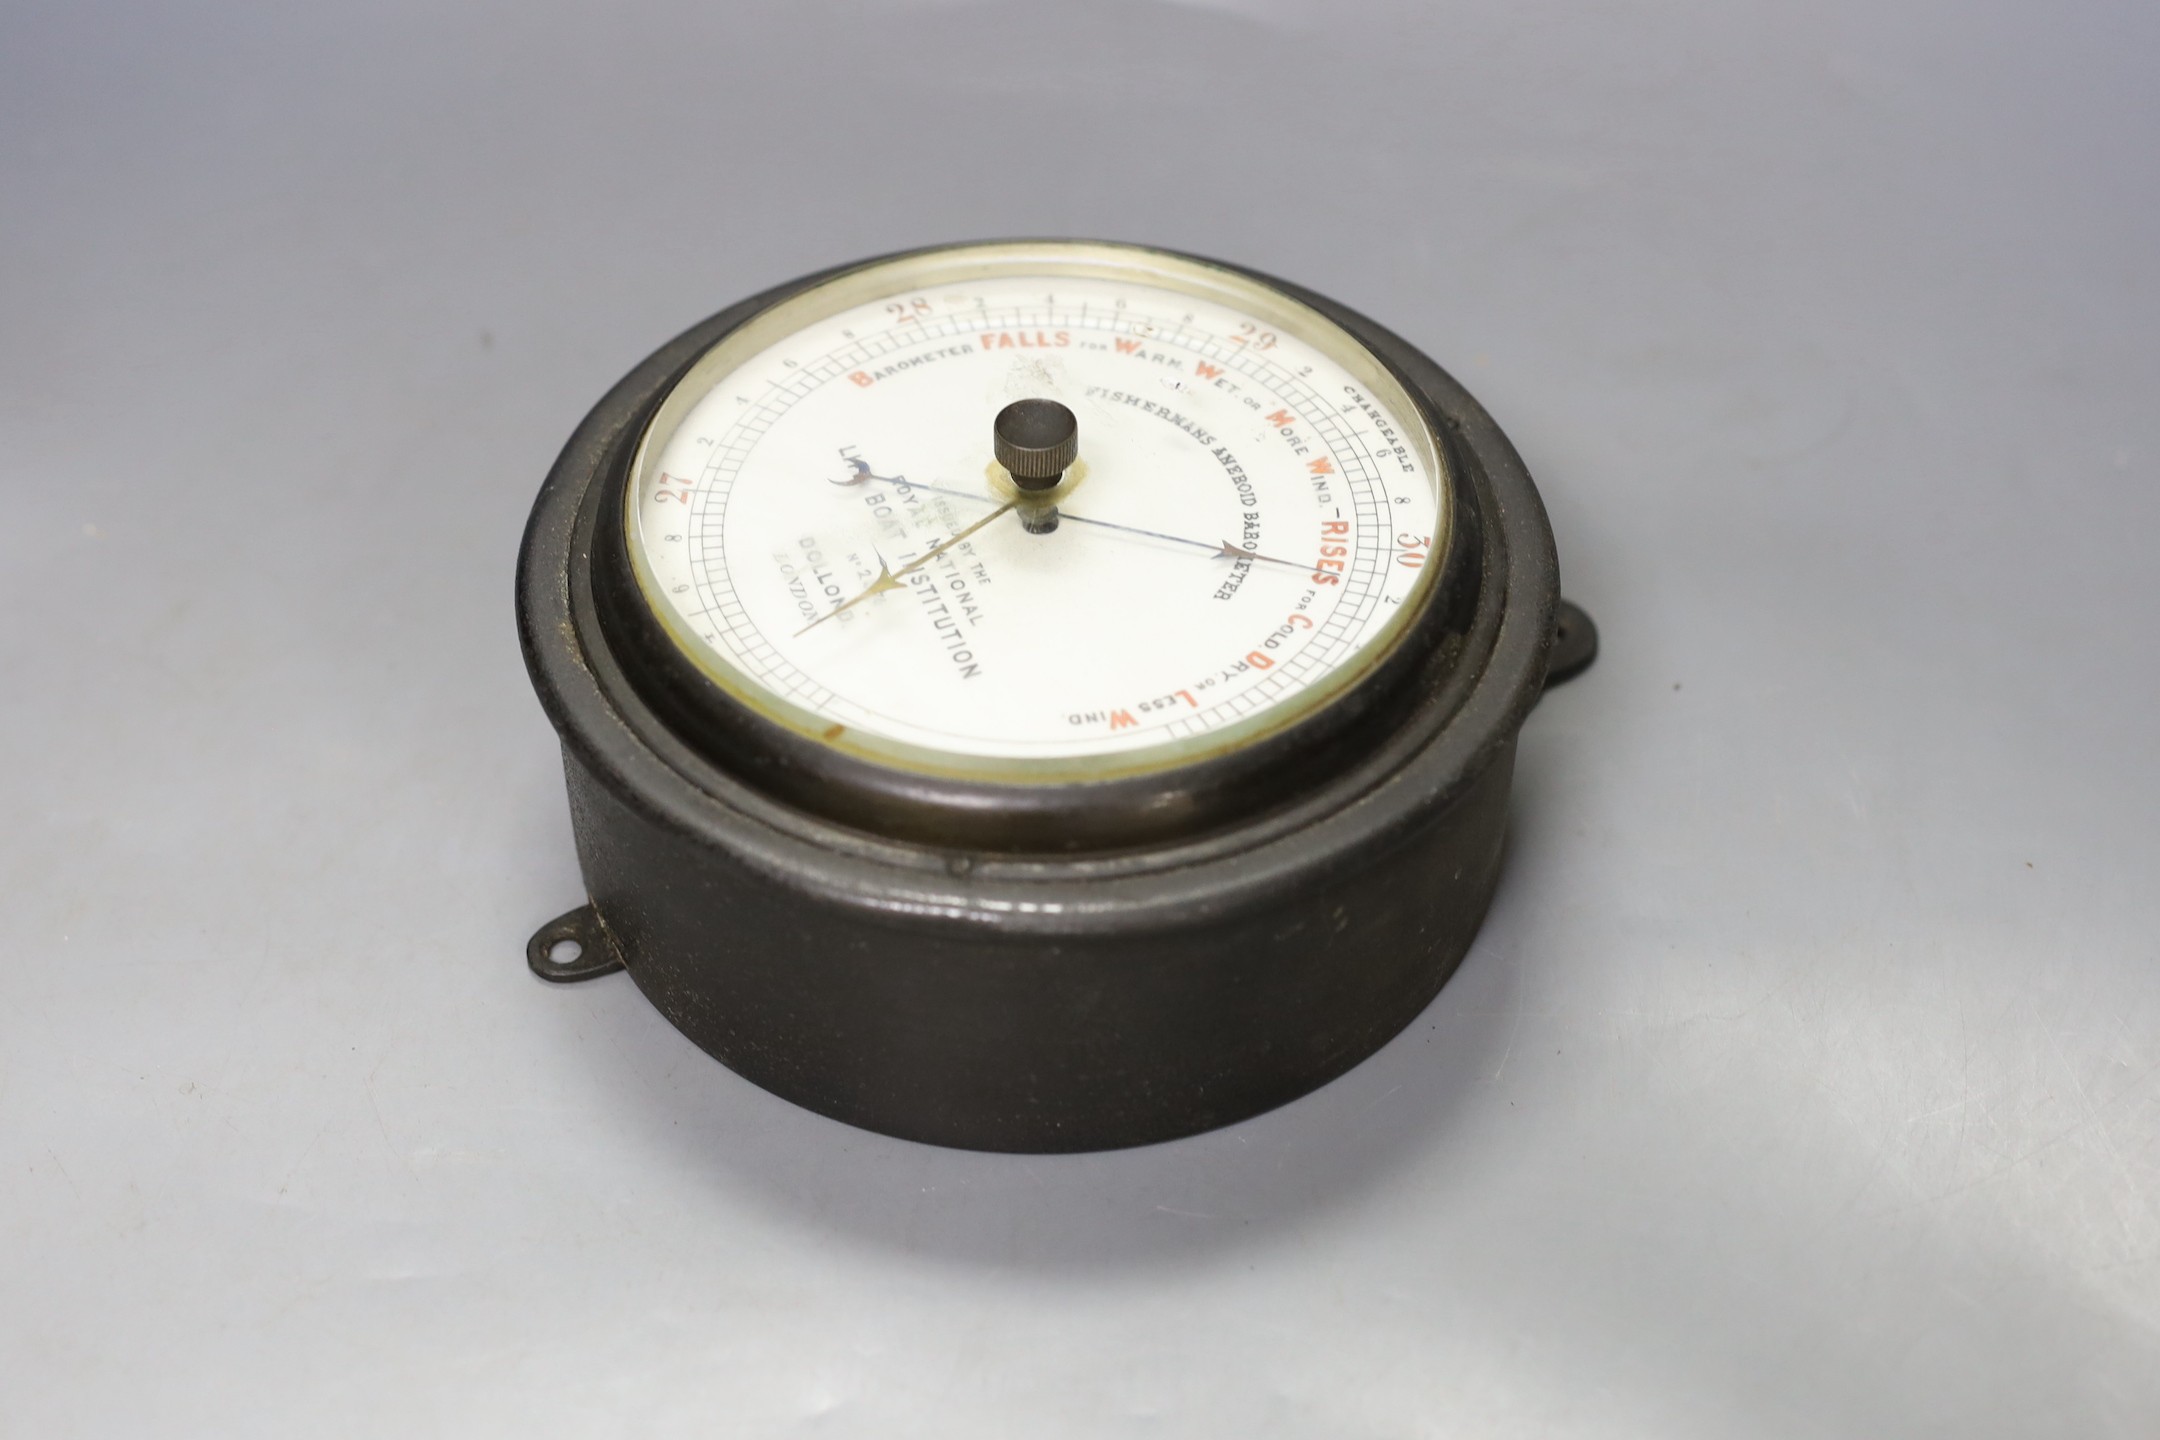 Dollond RNLI aneroid barometer - 16.5cm diameter